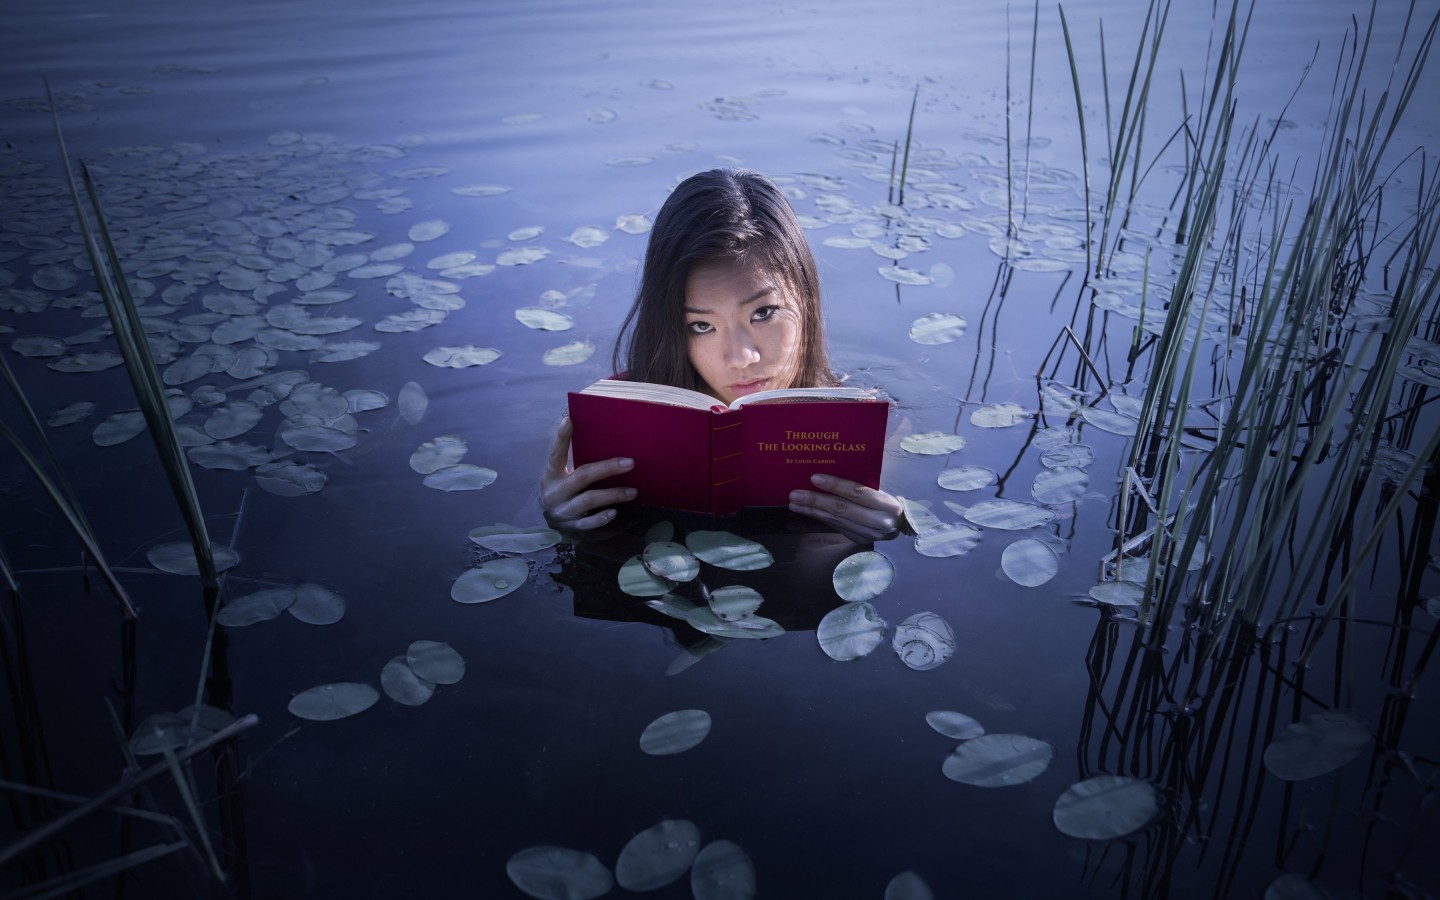 Азиатка с книгой в озере 1440x900